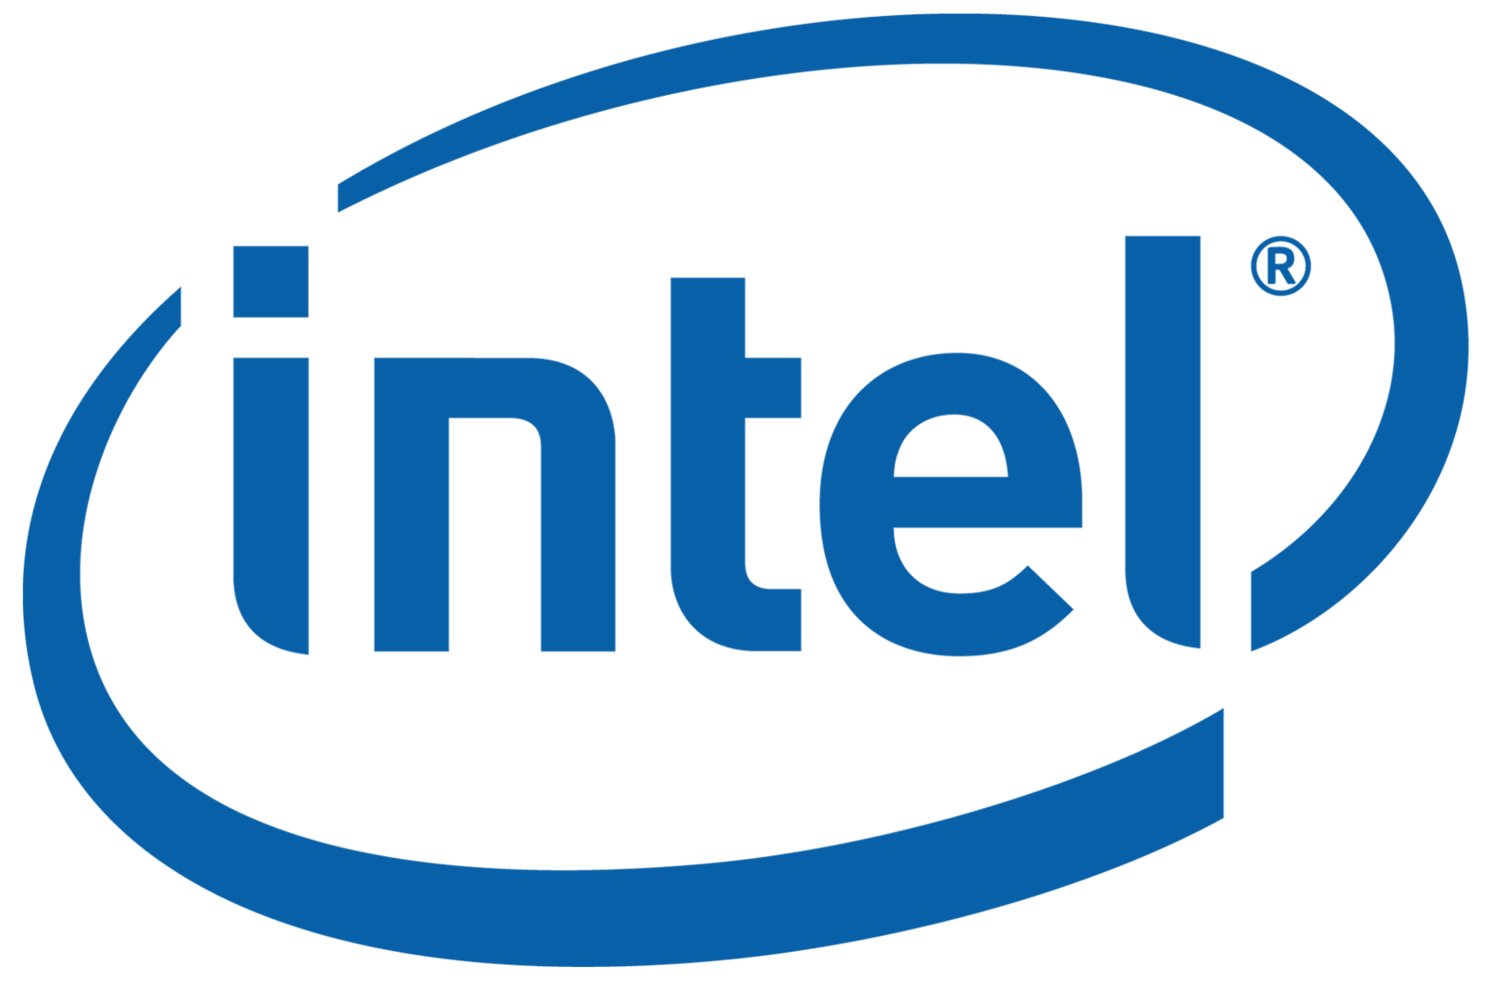 Производитель Intel